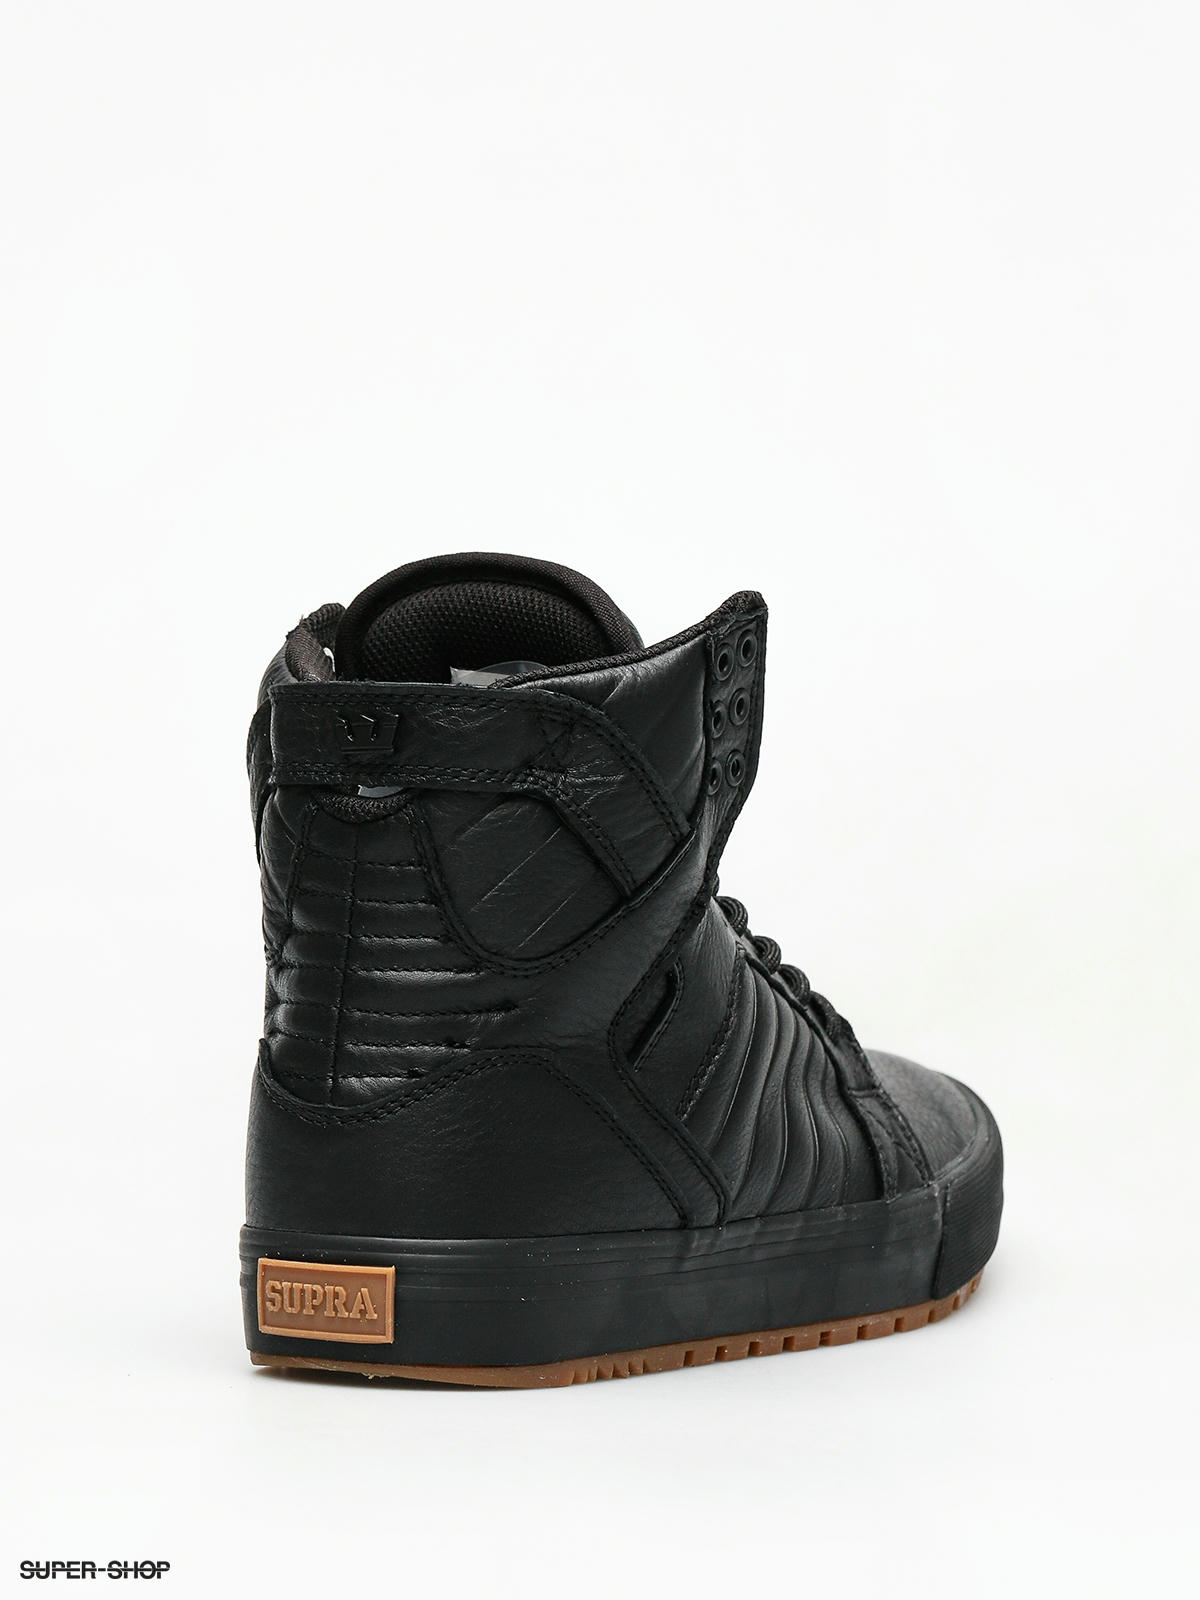 Supra Skytop Cw Shoes (black black/gum)